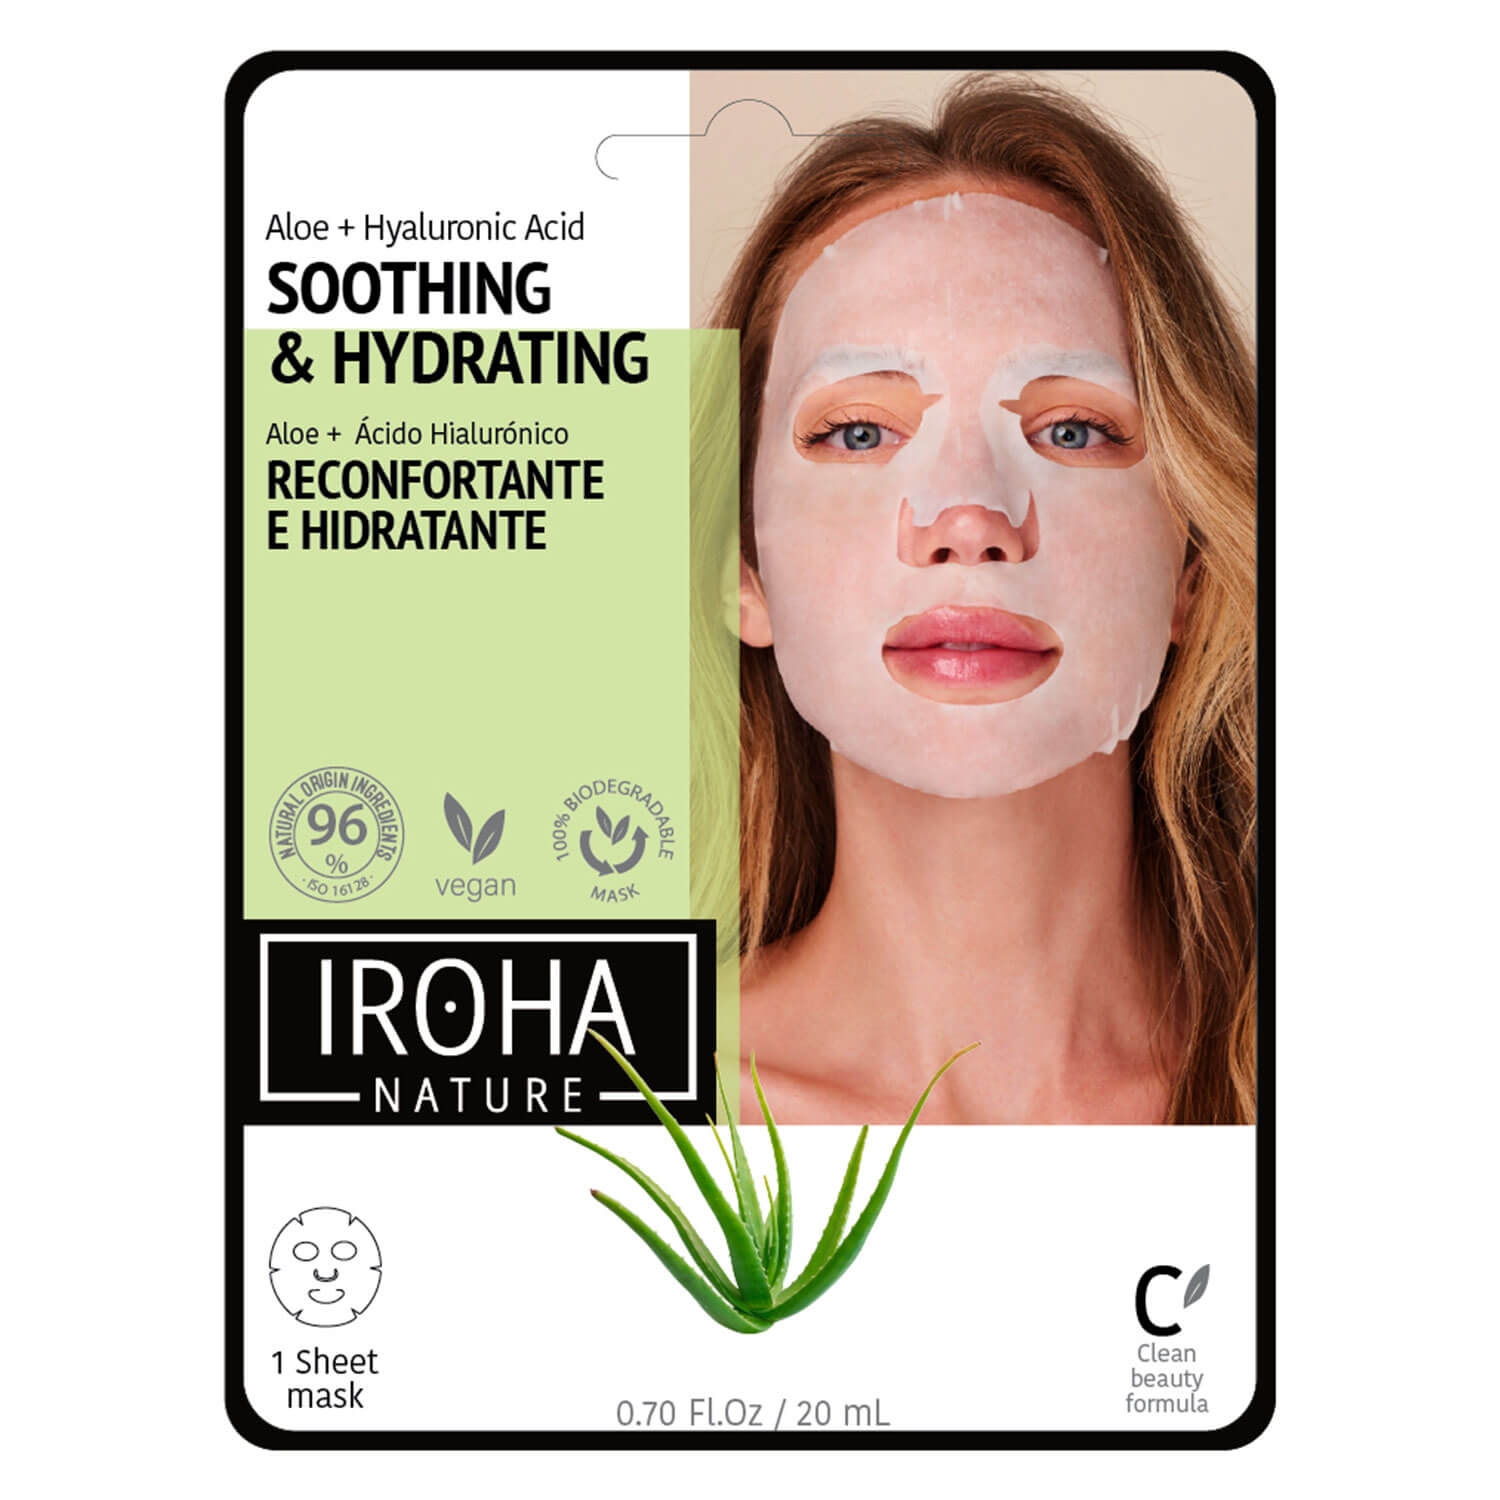 Produktbild von Iroha Nature - Soothing & Hydrating Aloe + Hyaluronic Acid Face Mask